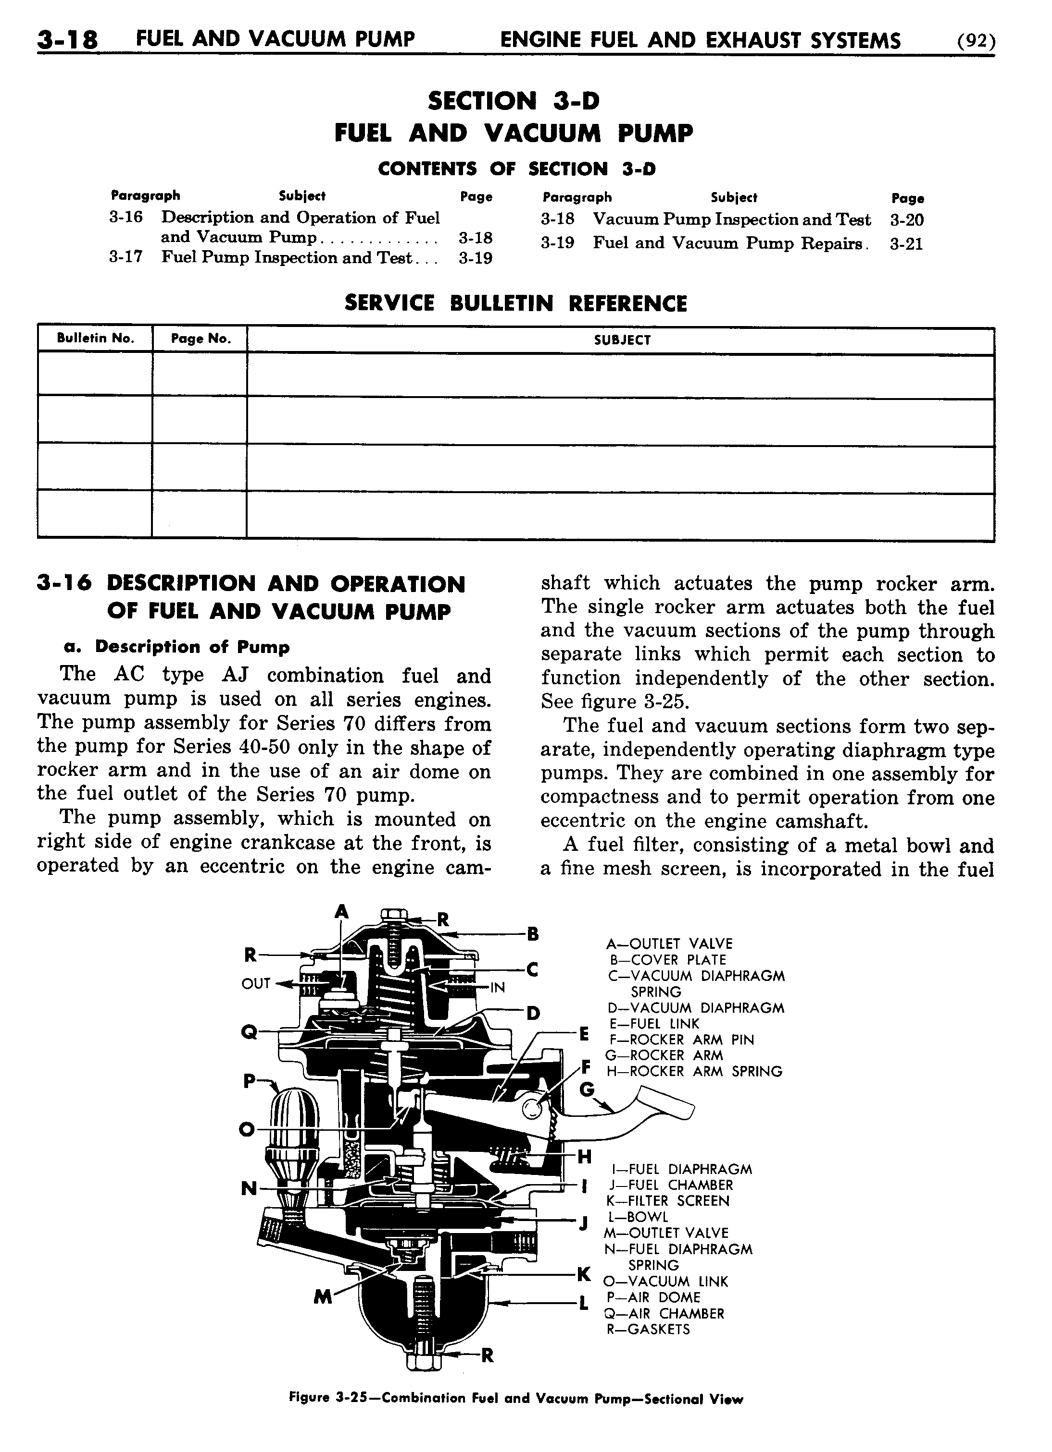 n_04 1948 Buick Shop Manual - Engine Fuel & Exhaust-018-018.jpg